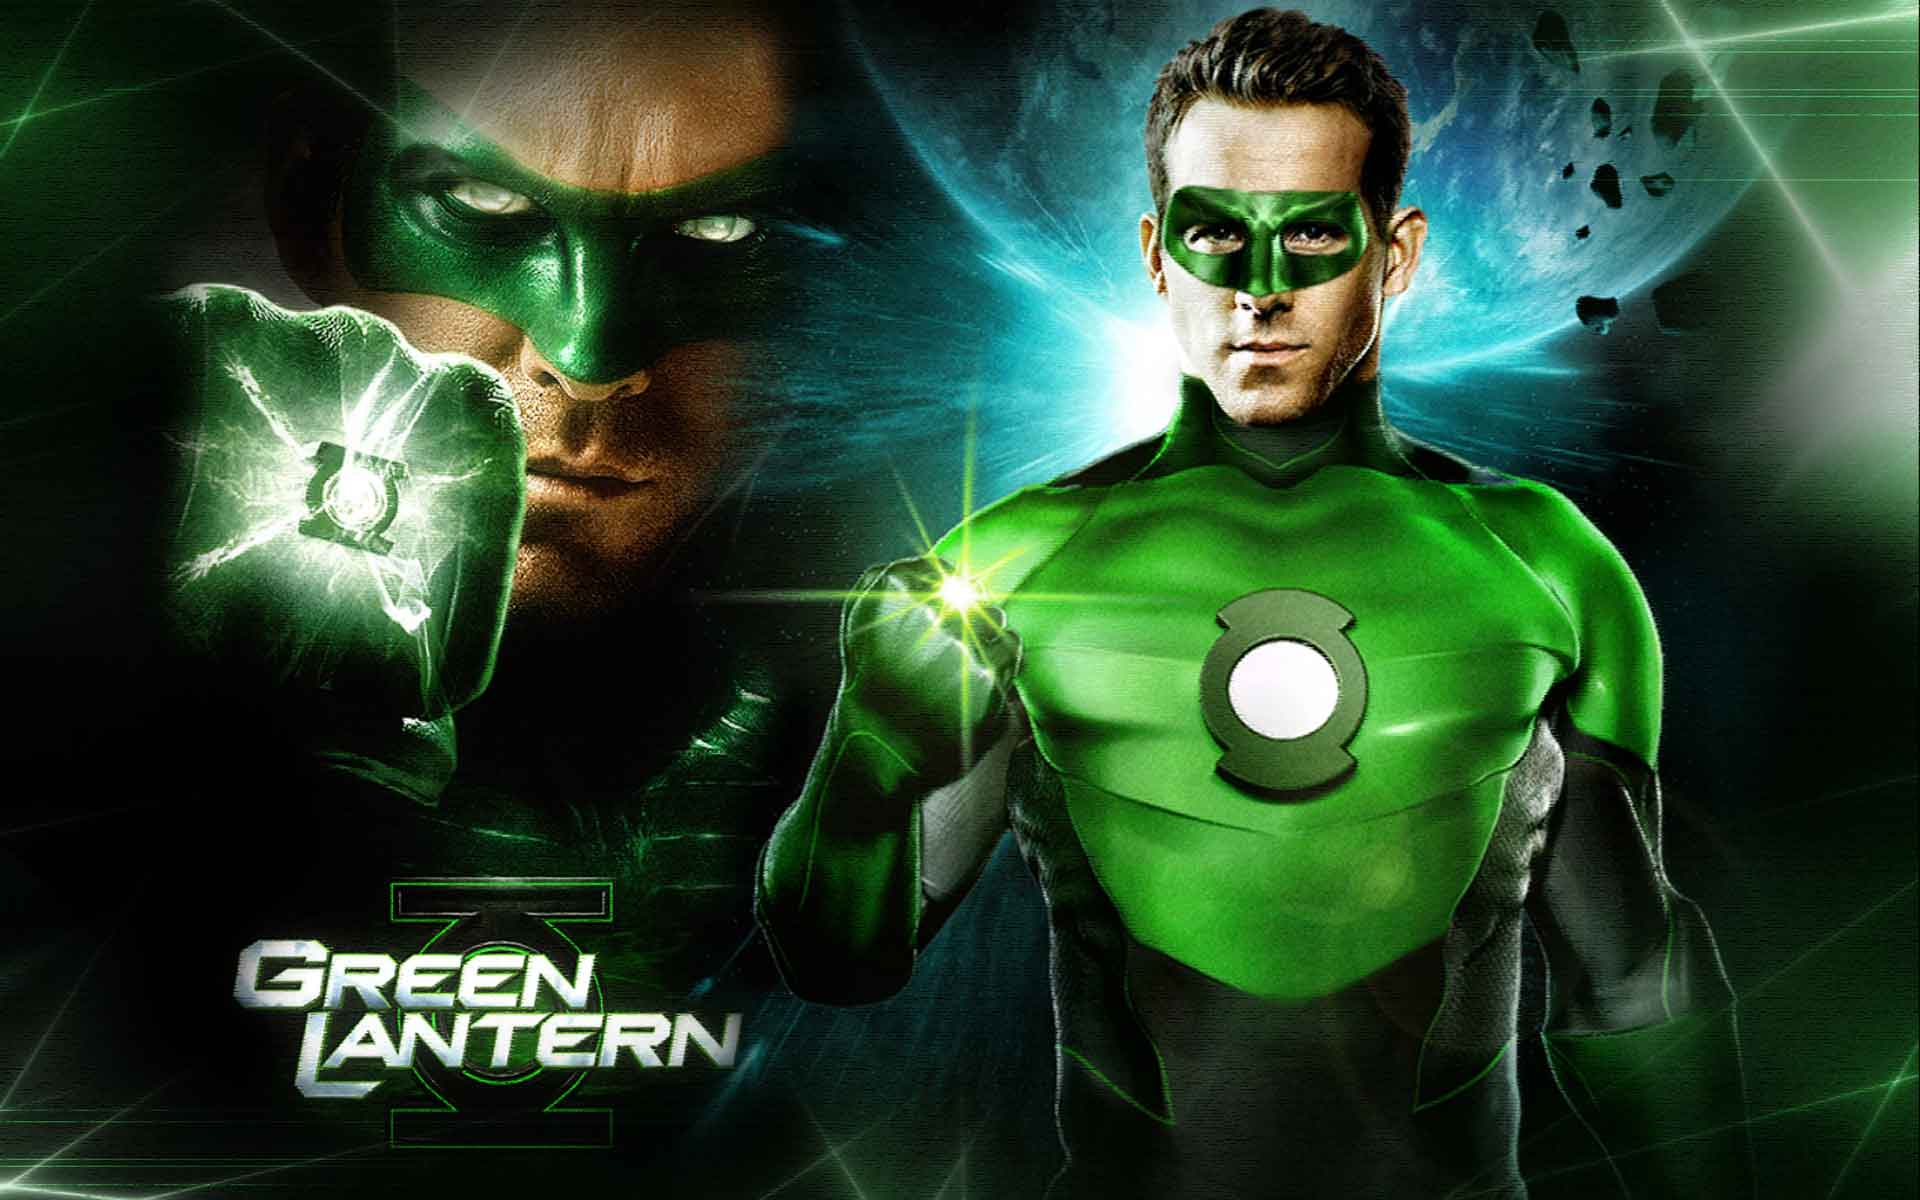 Green Lantern Wallpaper 27 259052 Image HD Wallpaper. Wallfoy.com